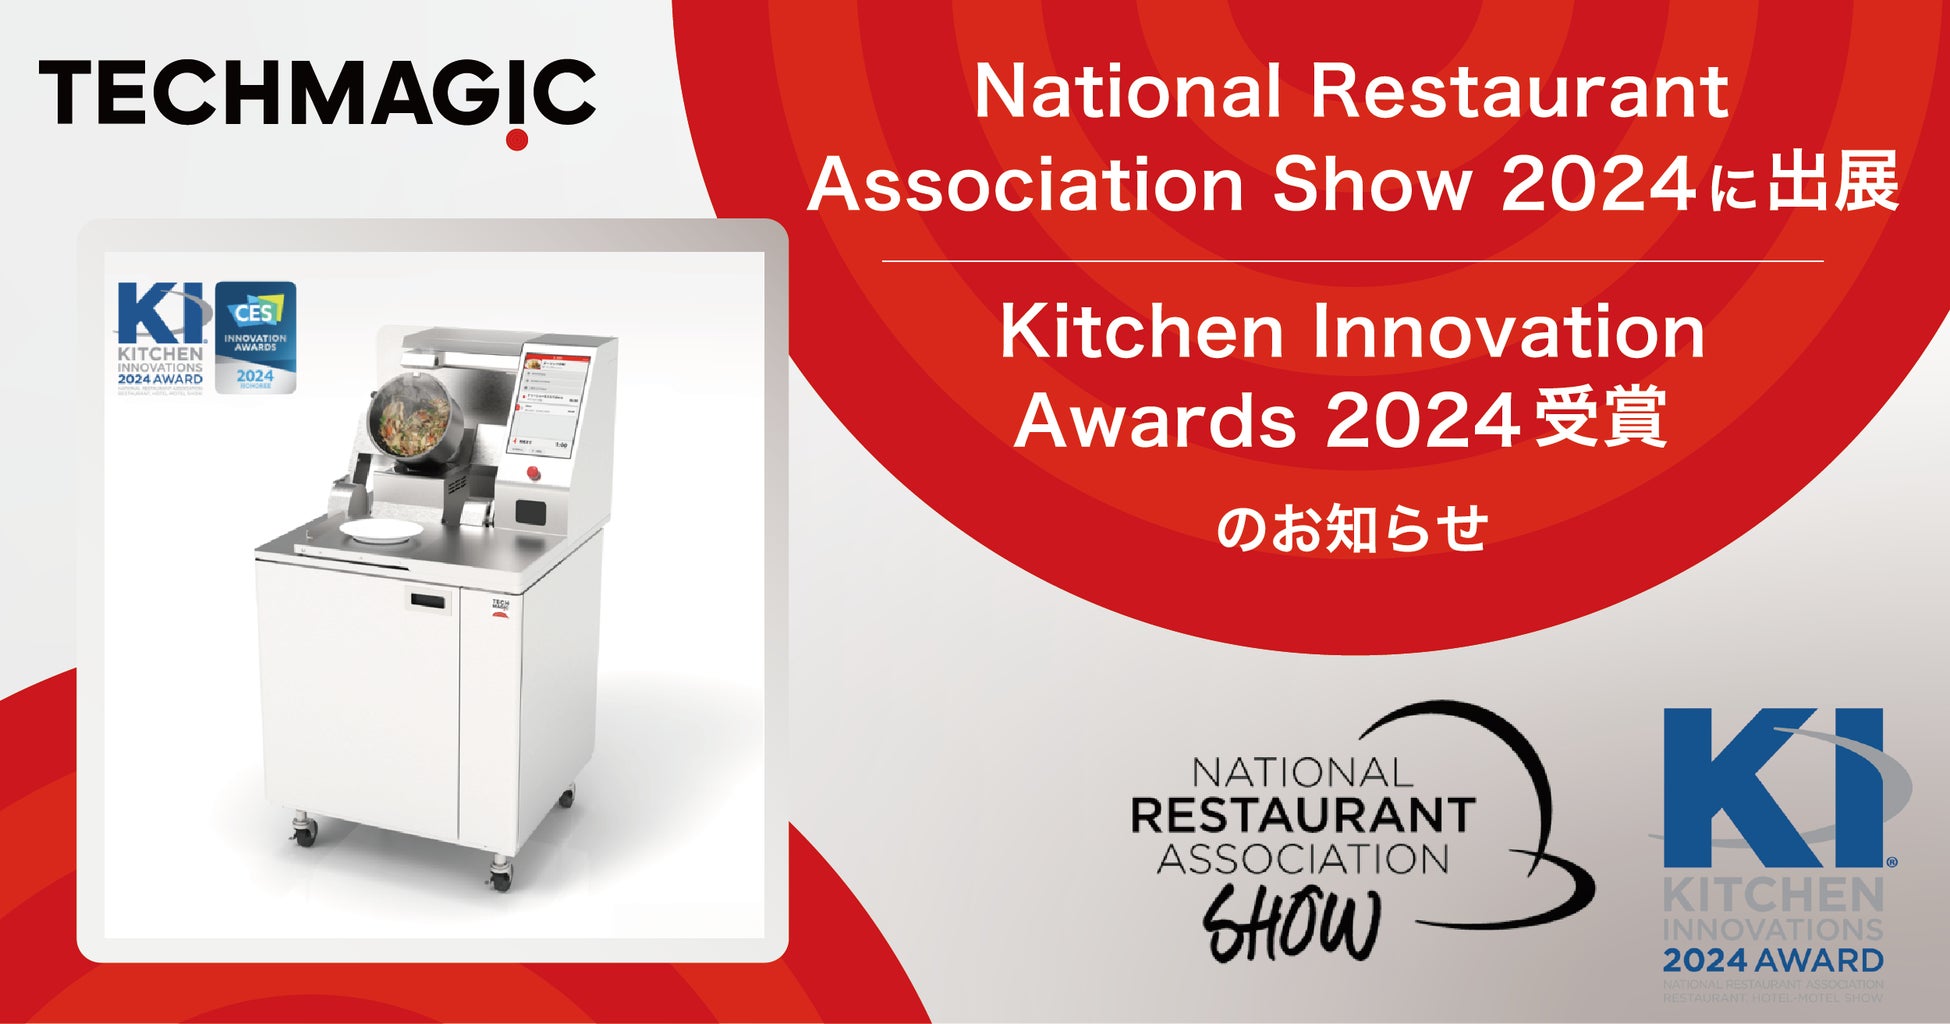 National Restaurant Association ShowにてKitchen Innovation Awardsを受賞した「I-Robo」を出展